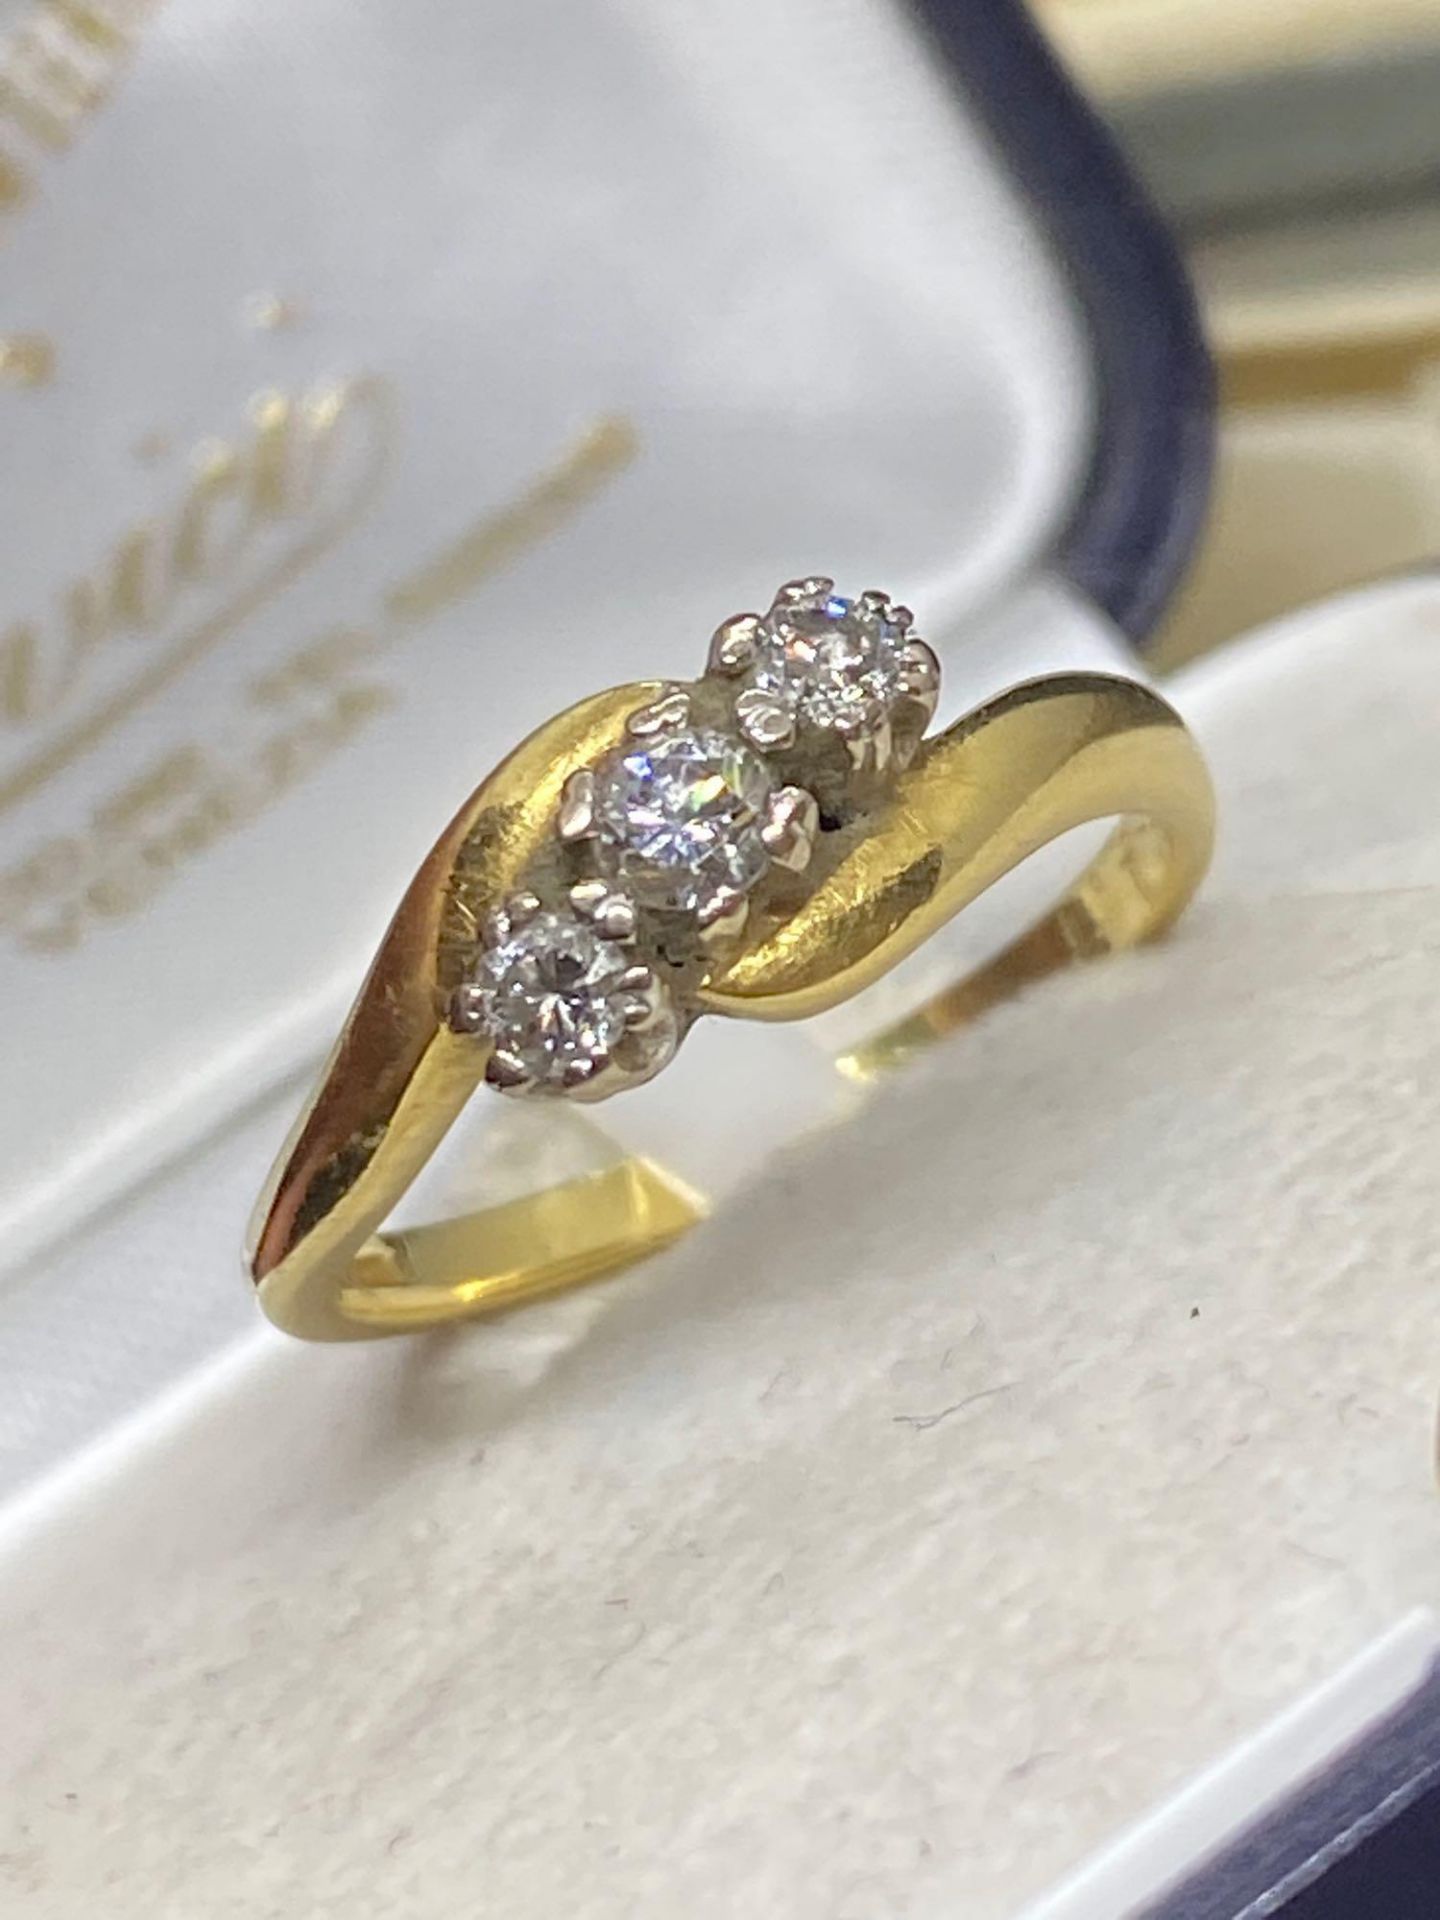 18ct Gold 3 Stone Diamond Ring - G/H-SI Diamonds - 4 Grams - Image 2 of 3